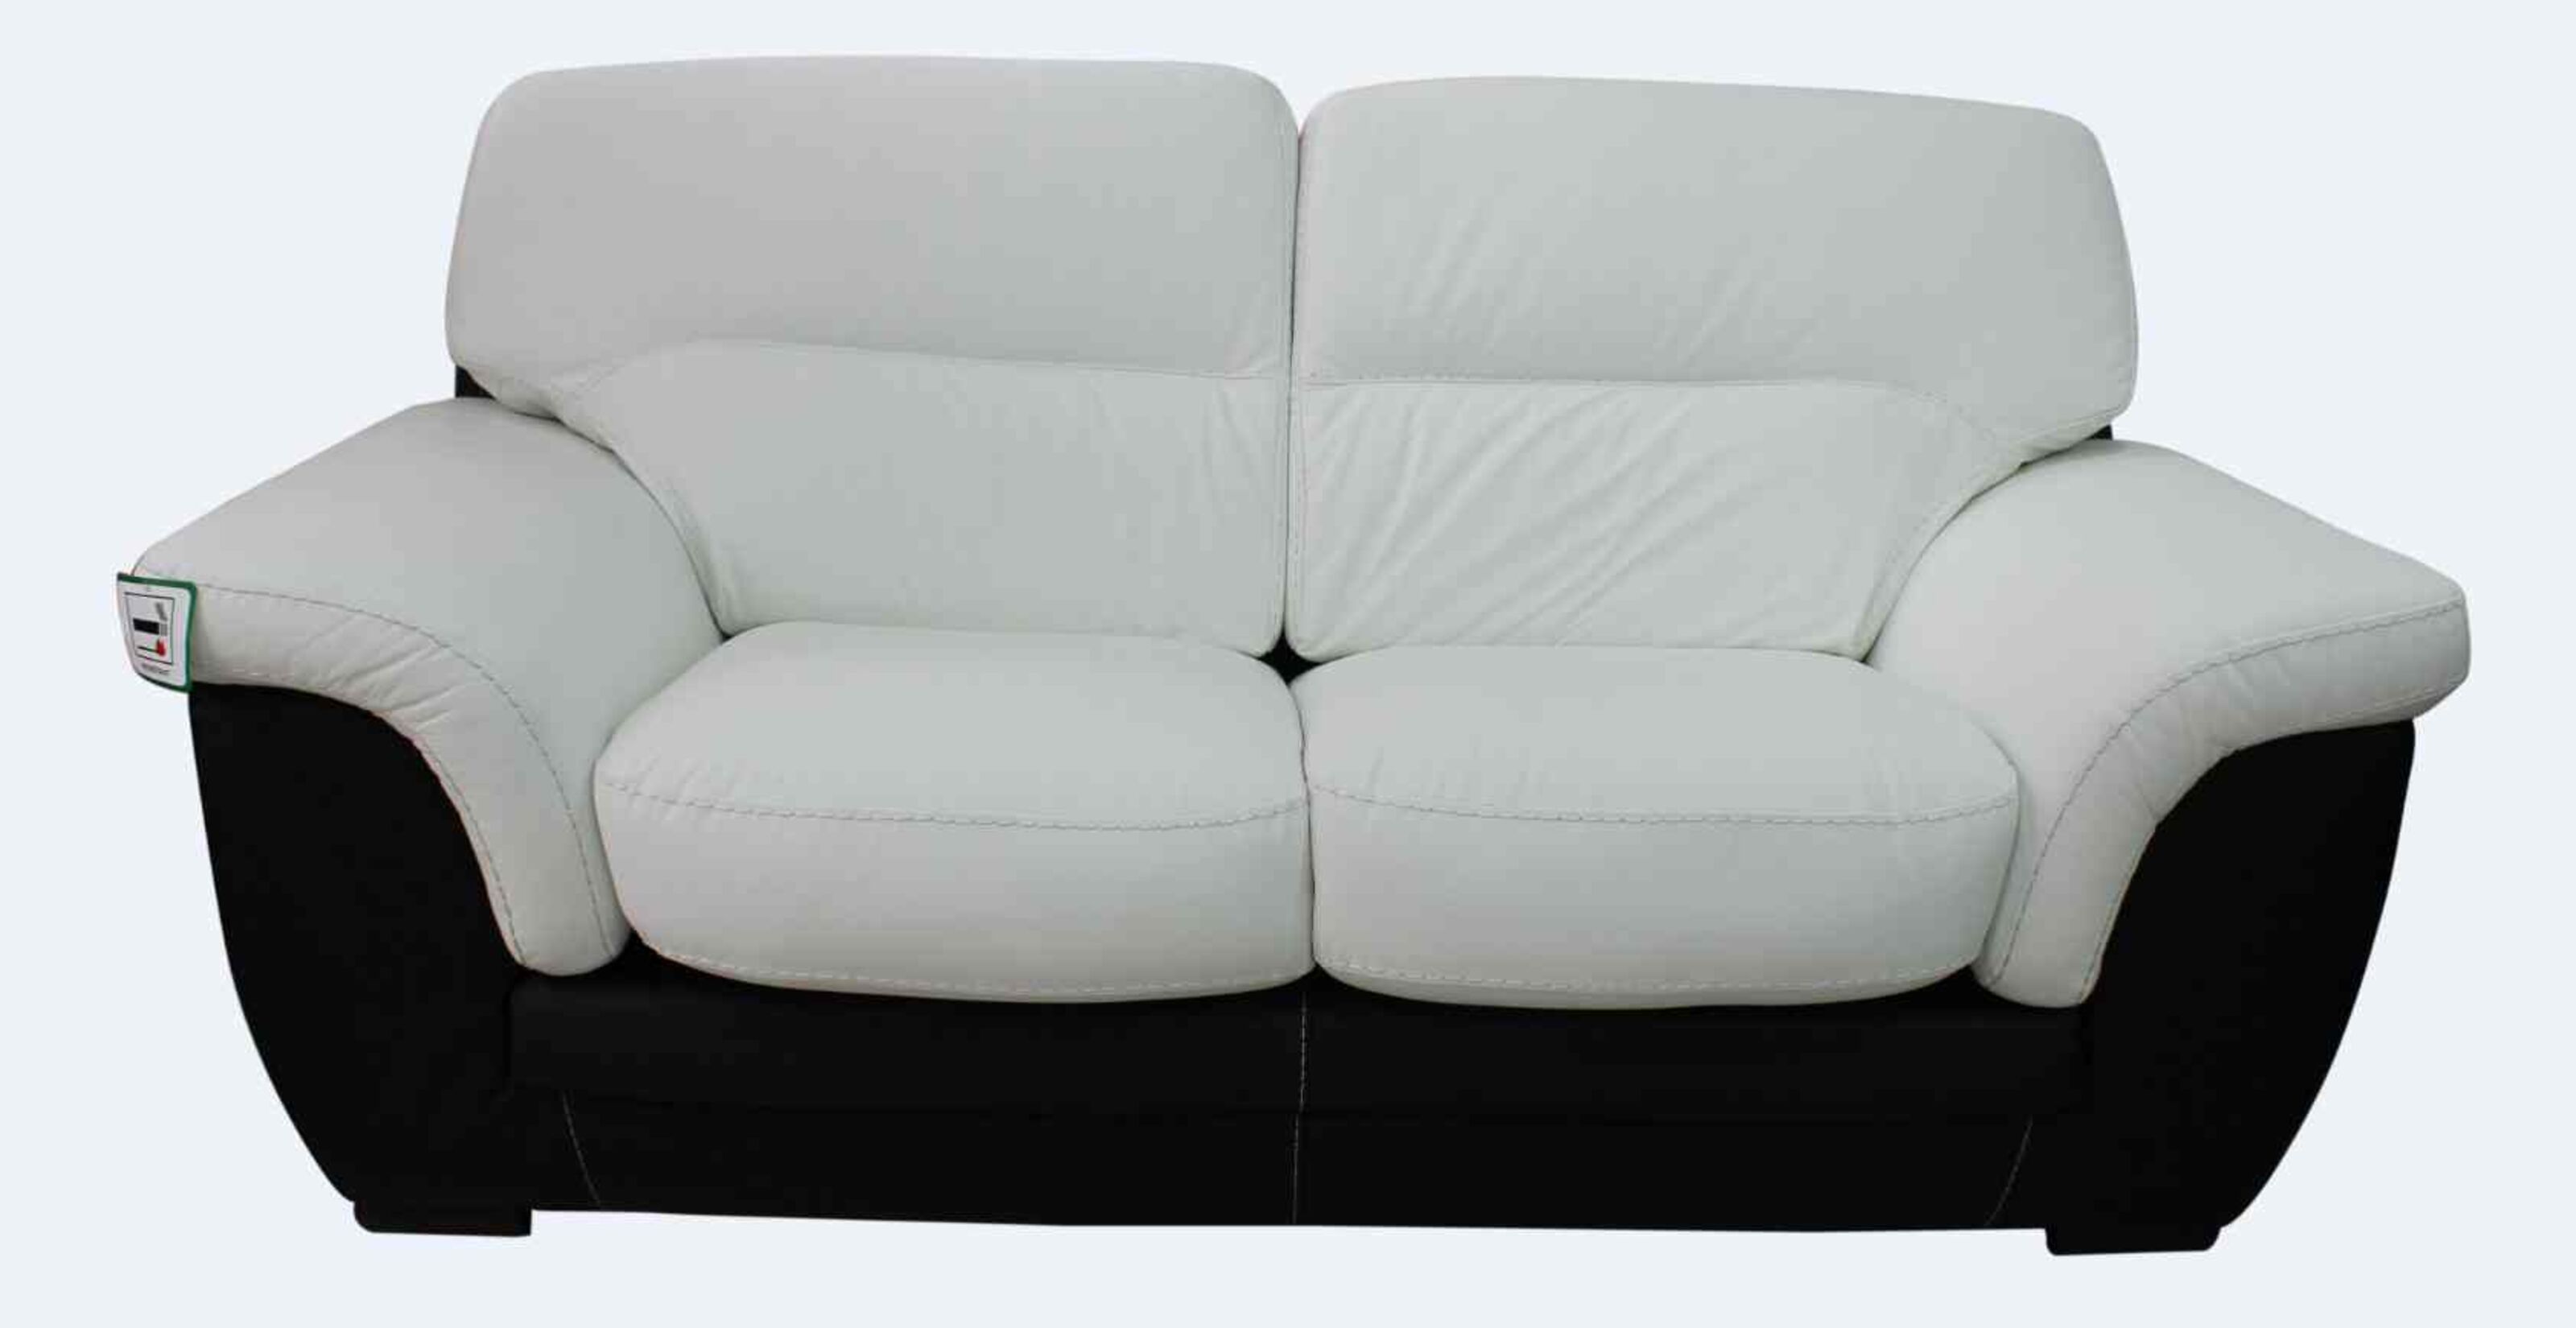 Italian Daniel Leather 2 Seater, Black 2 Seater Leather Sofa Bed